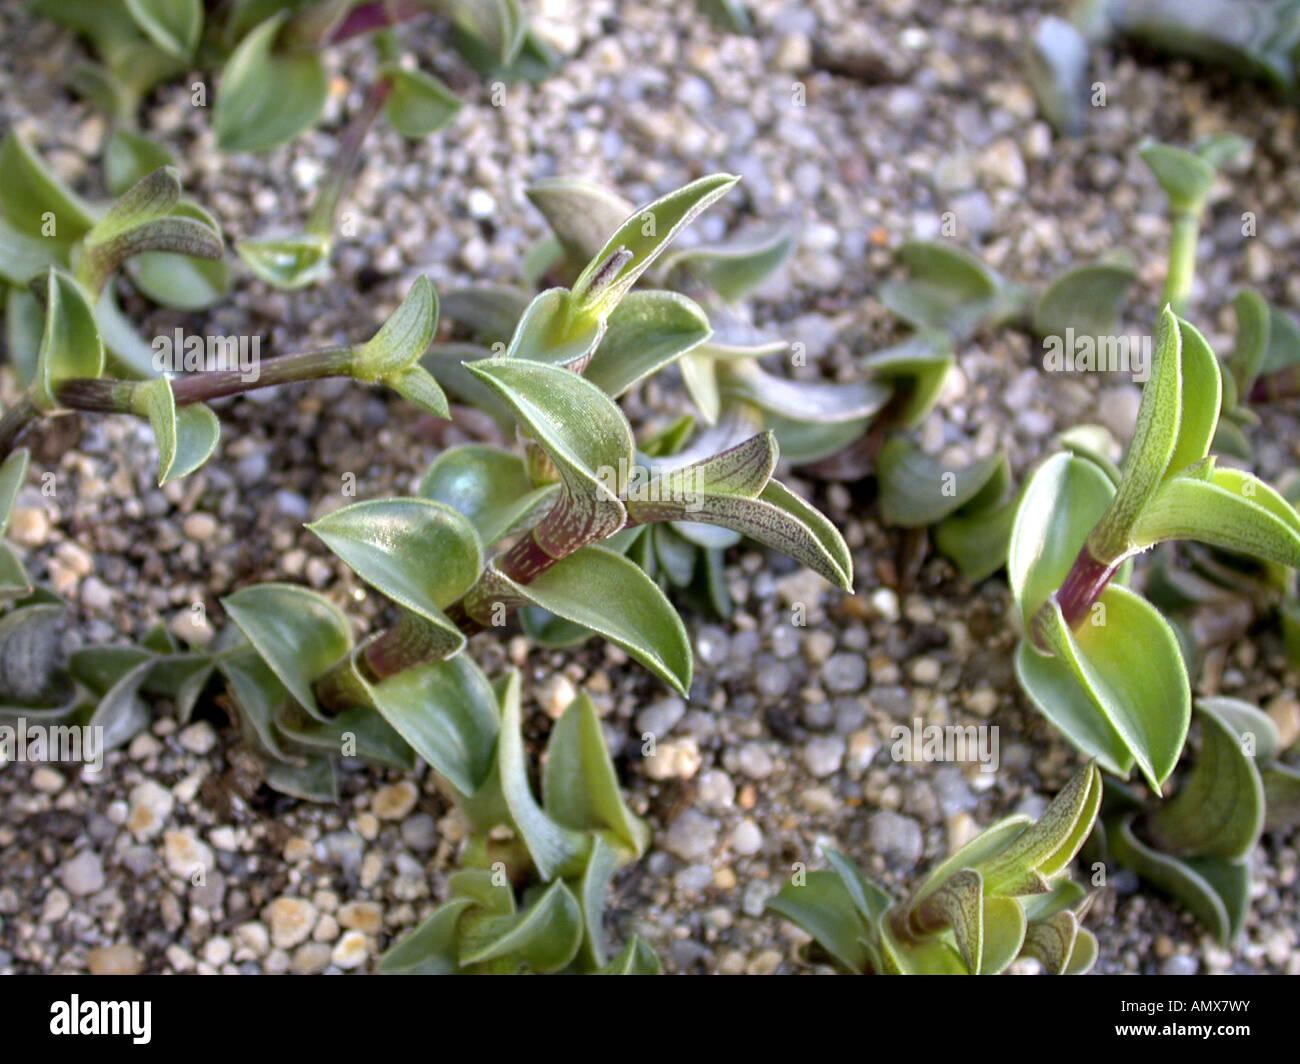 chain-plant-chainplant-callisia-navicularis-sprouts-AMX7WY.jpg